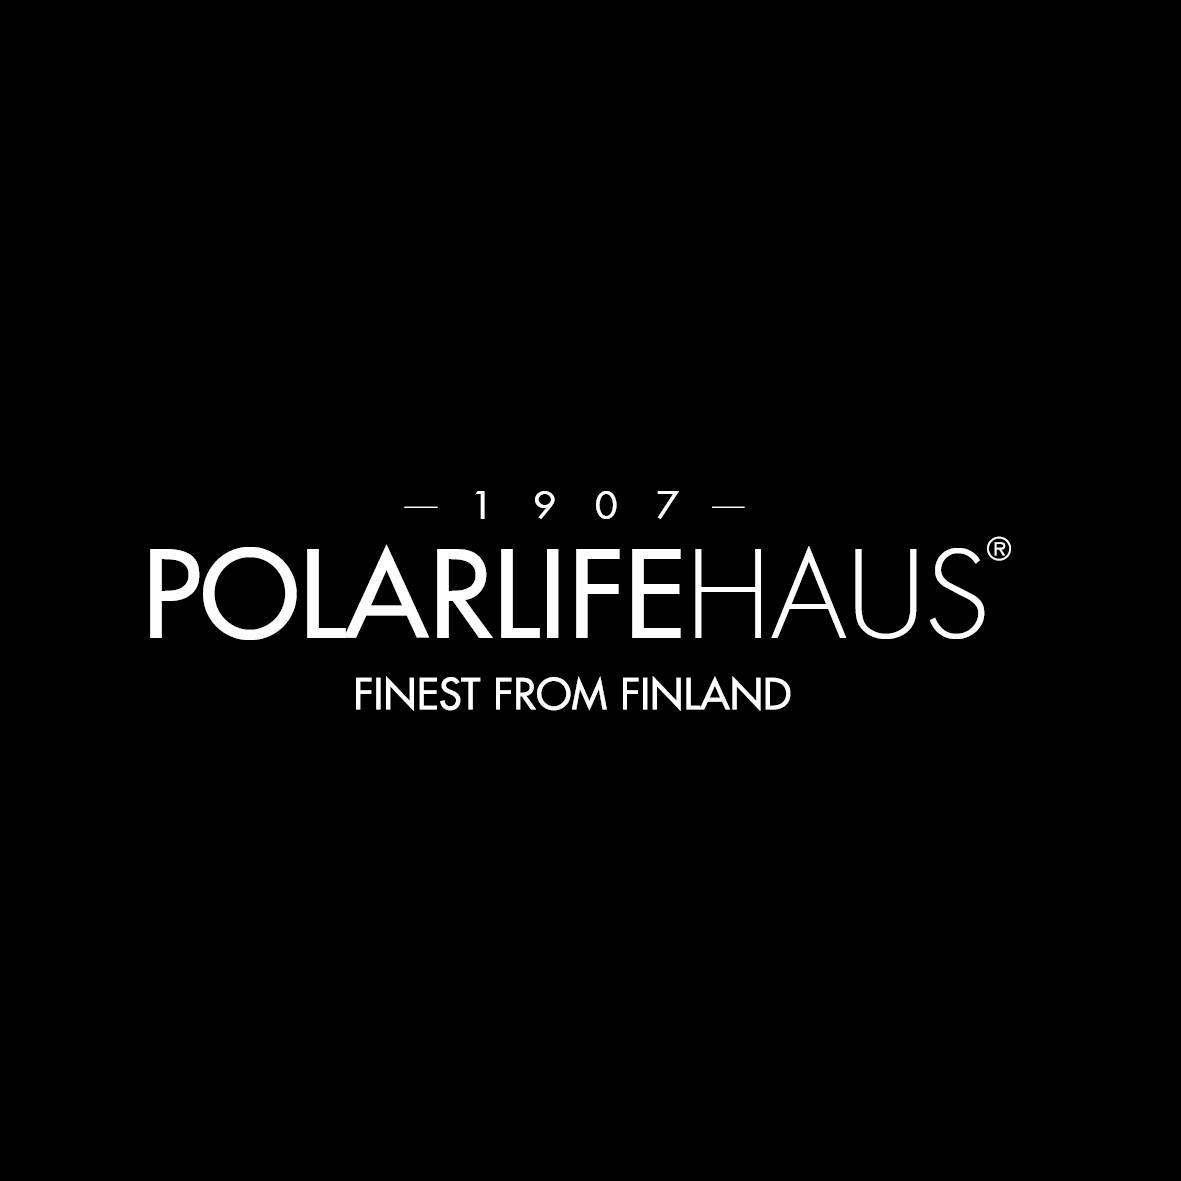 Polar Life Haus gallery